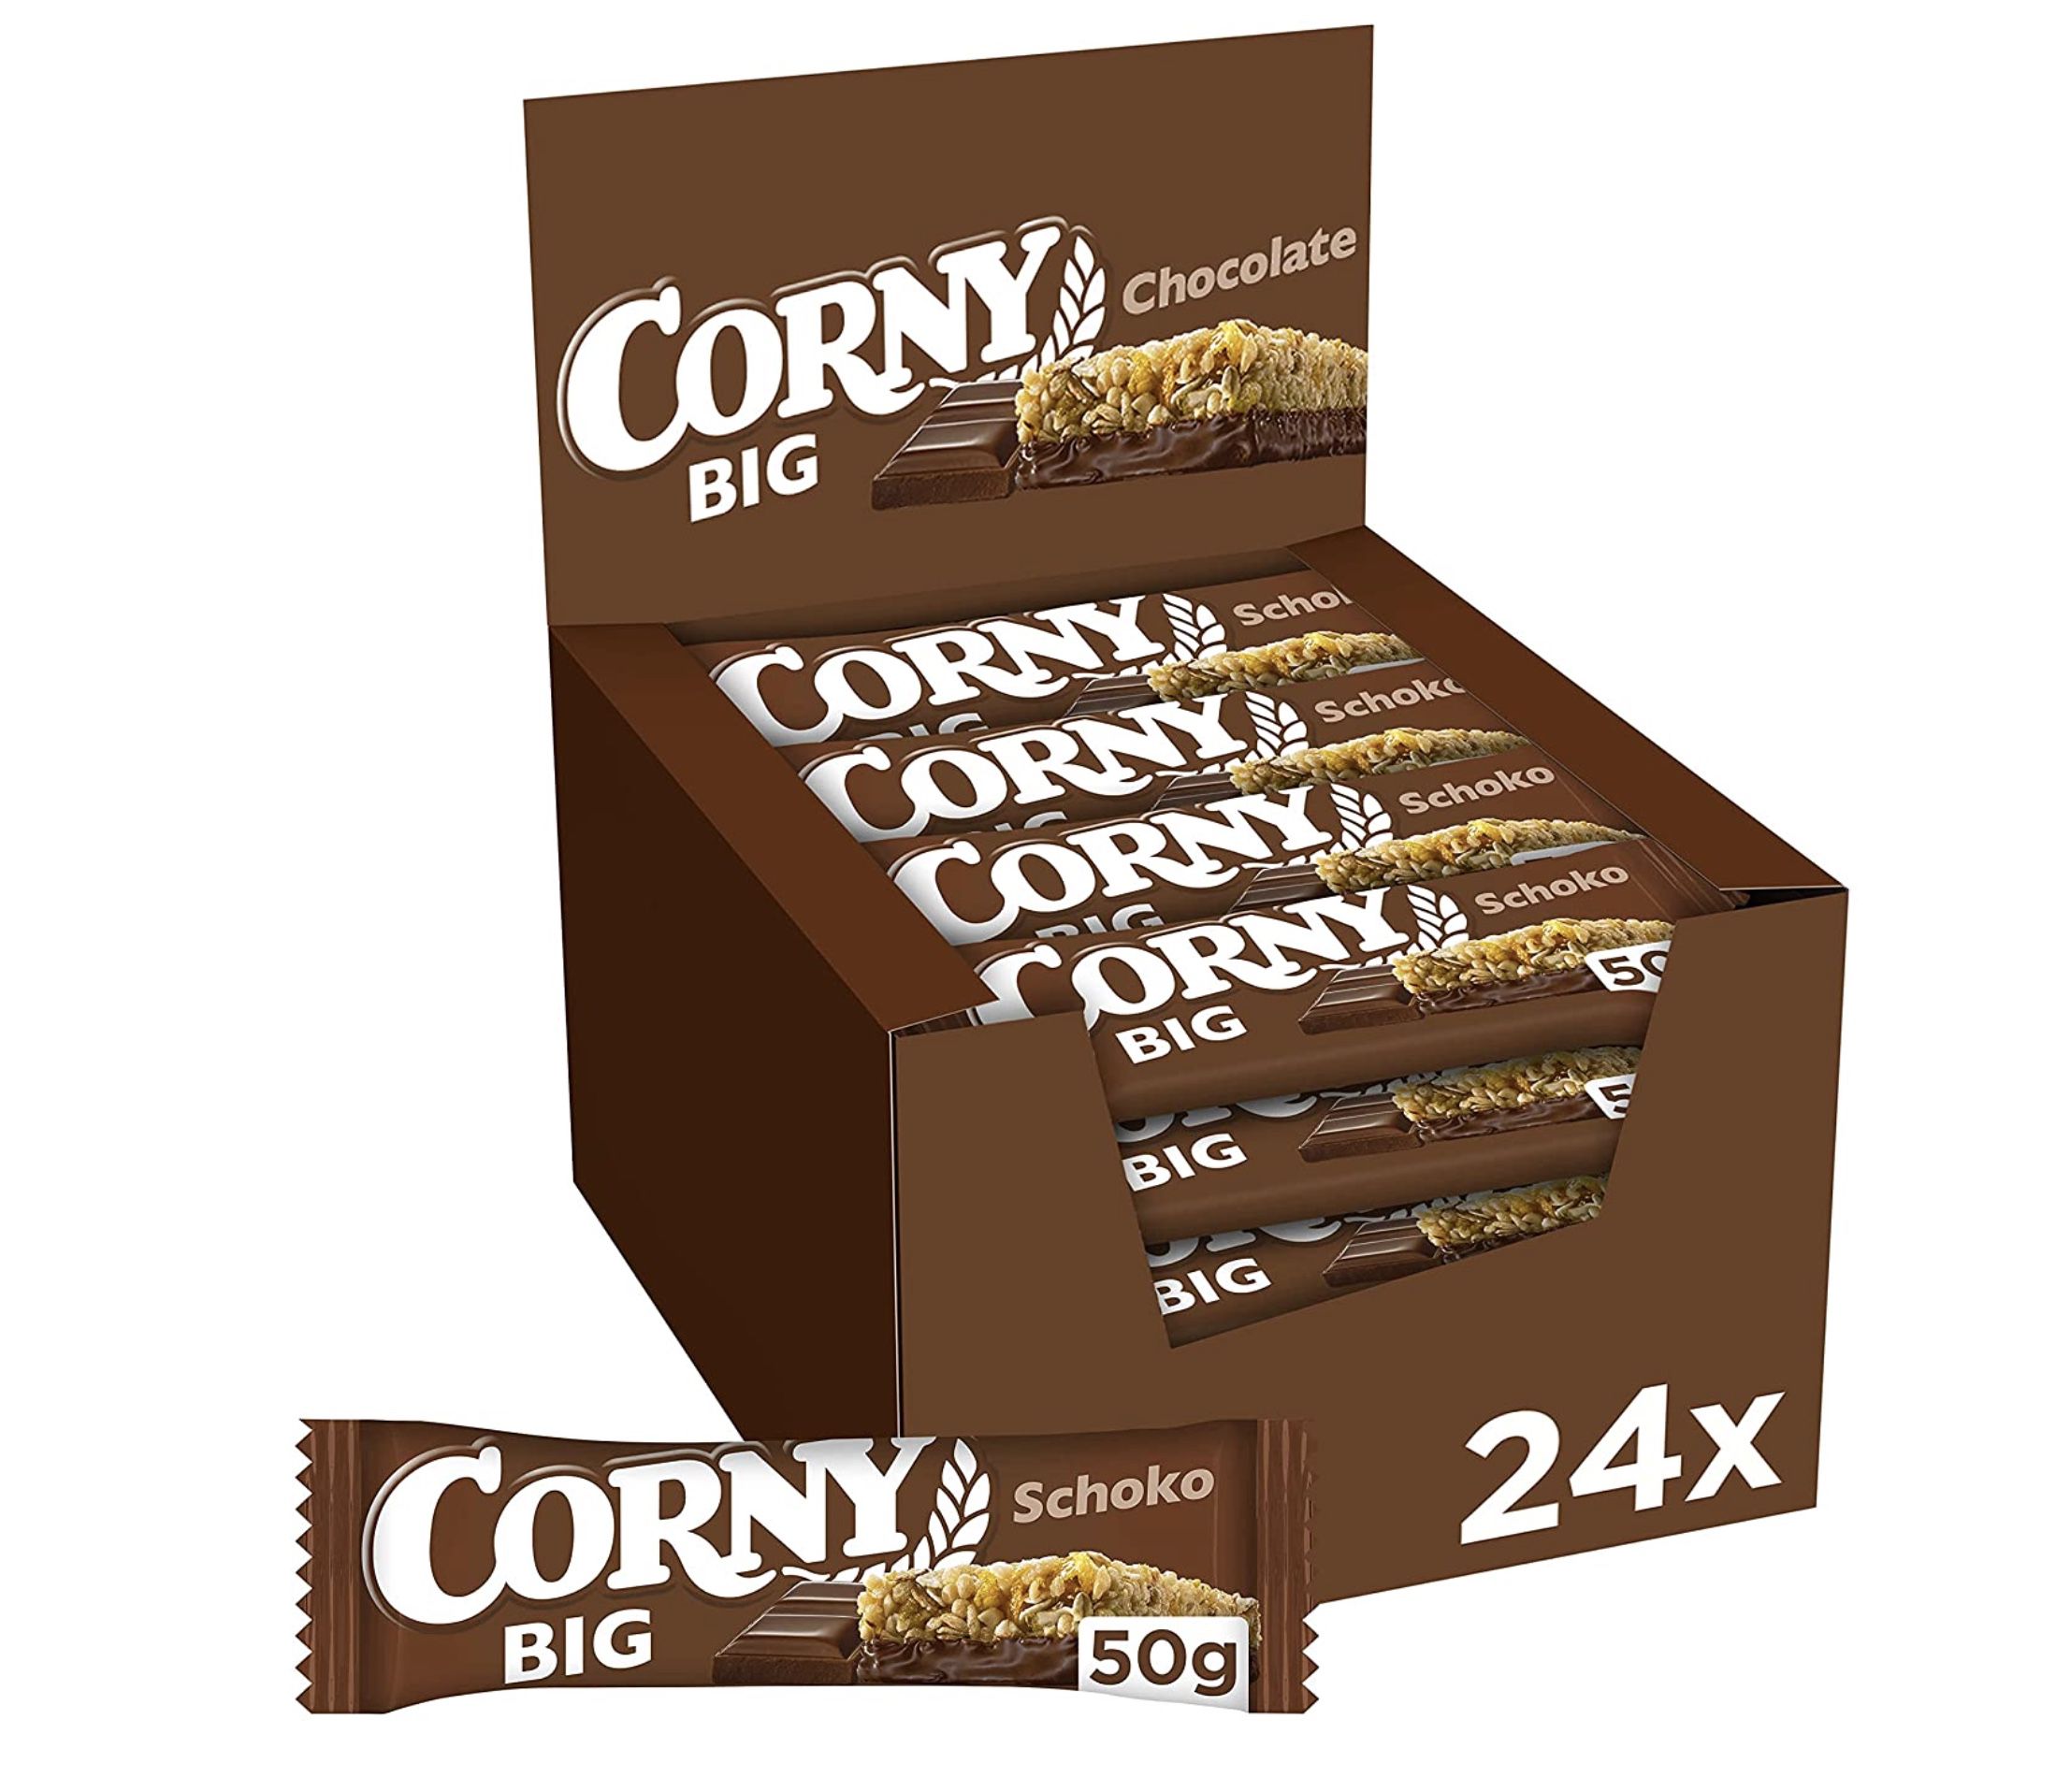 24er Pack Corny BIG Schoko für 9,11€ (statt 14€)   Prime Sparabo